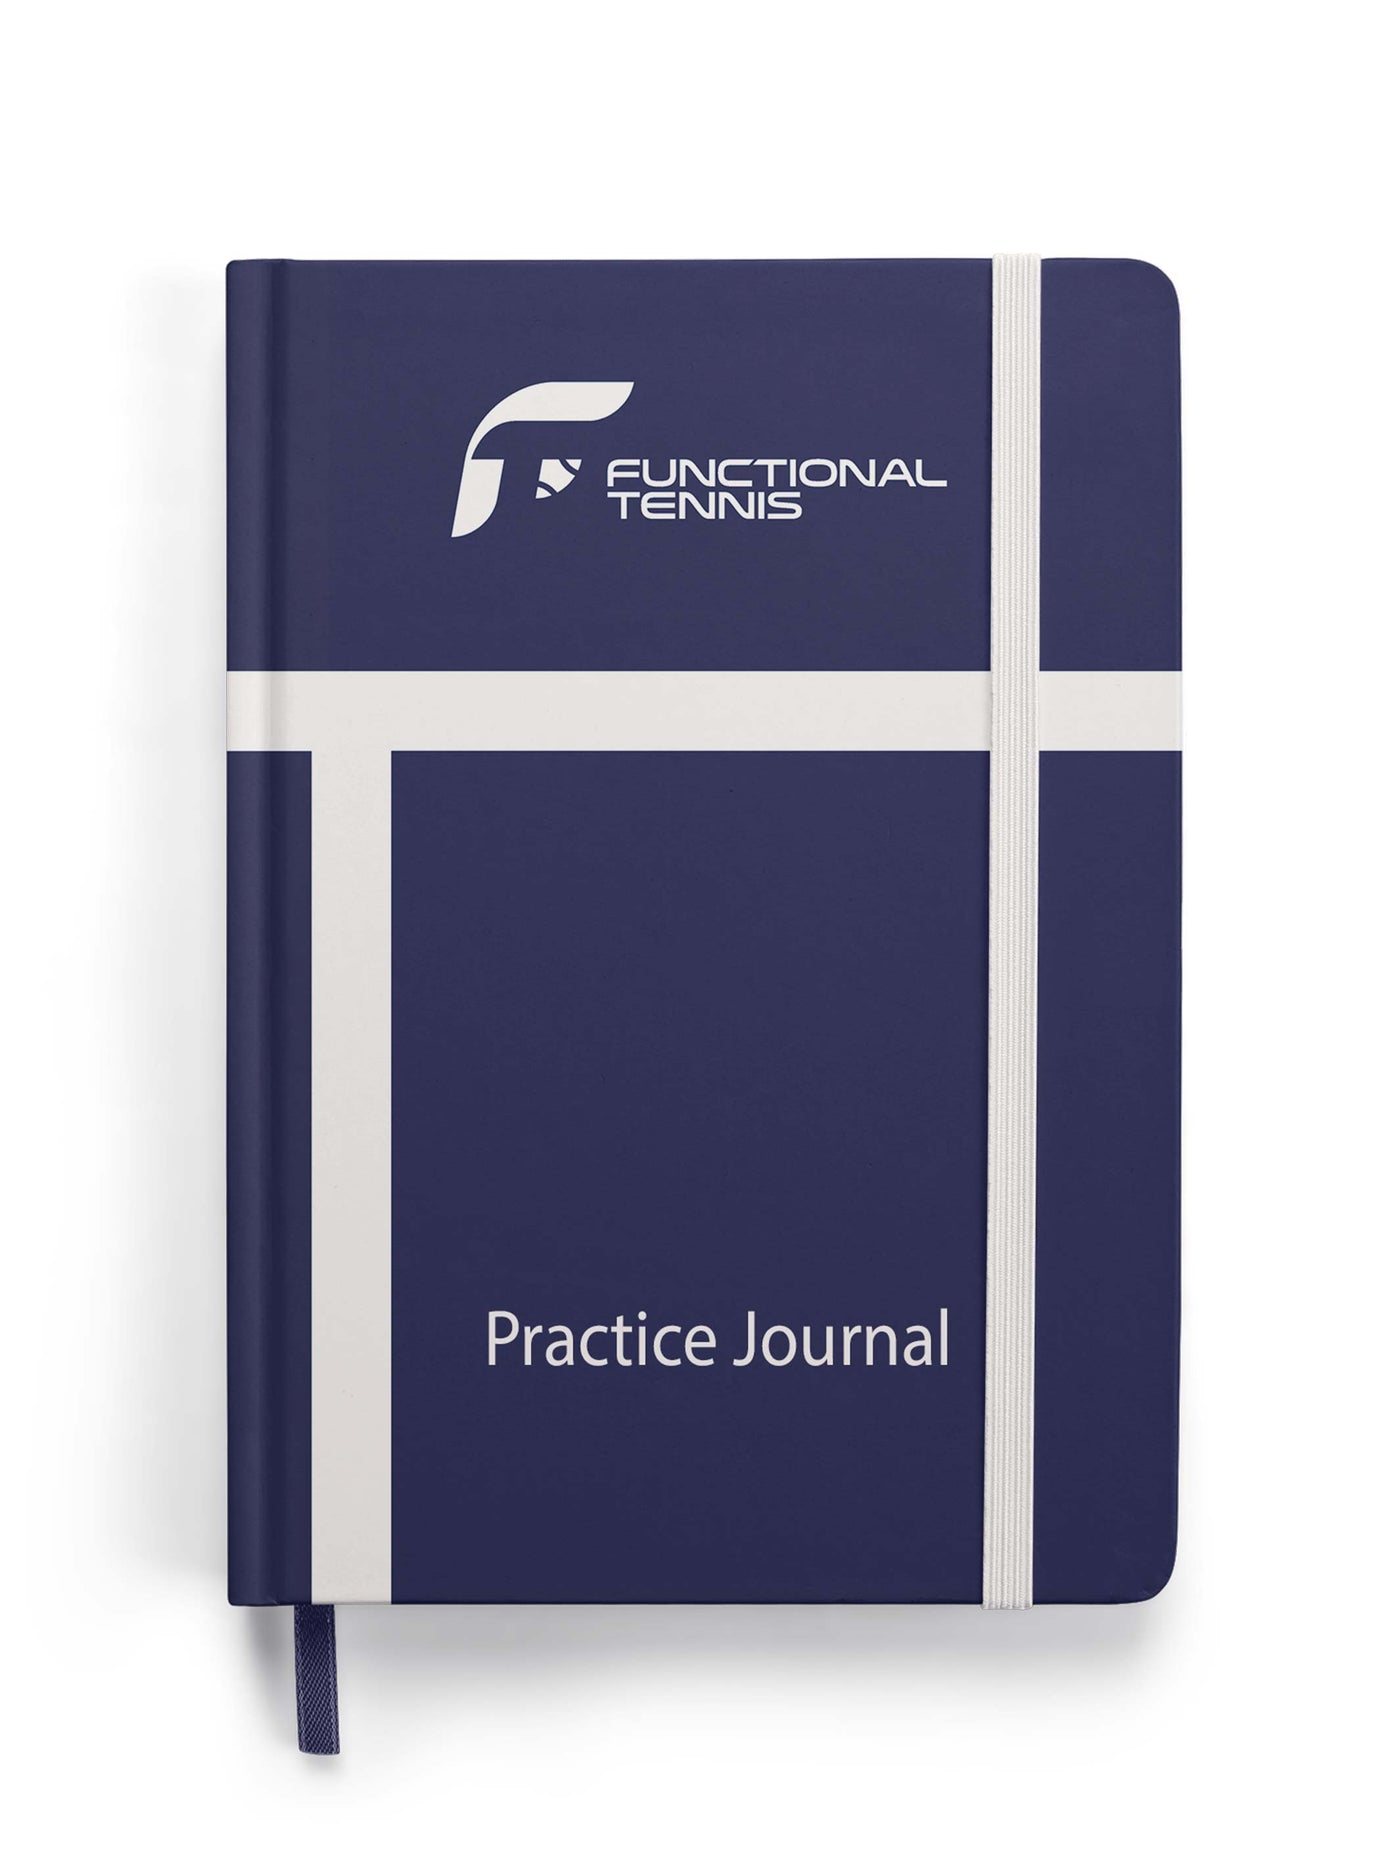 The Functional Tennis Practice Journal